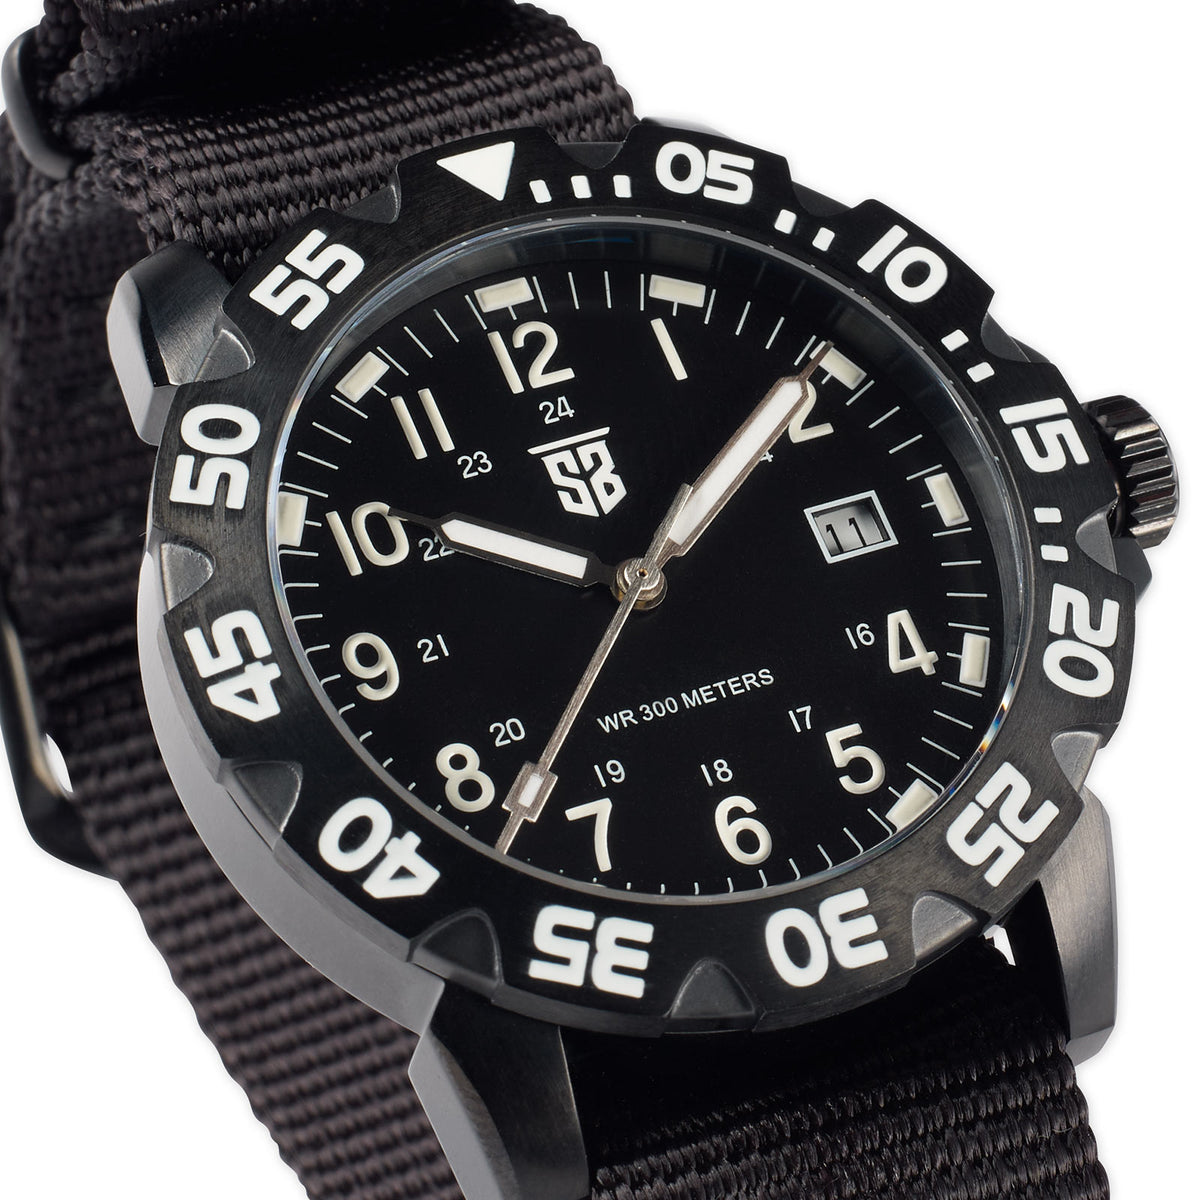 SANS-13 Tactical Sport Watch